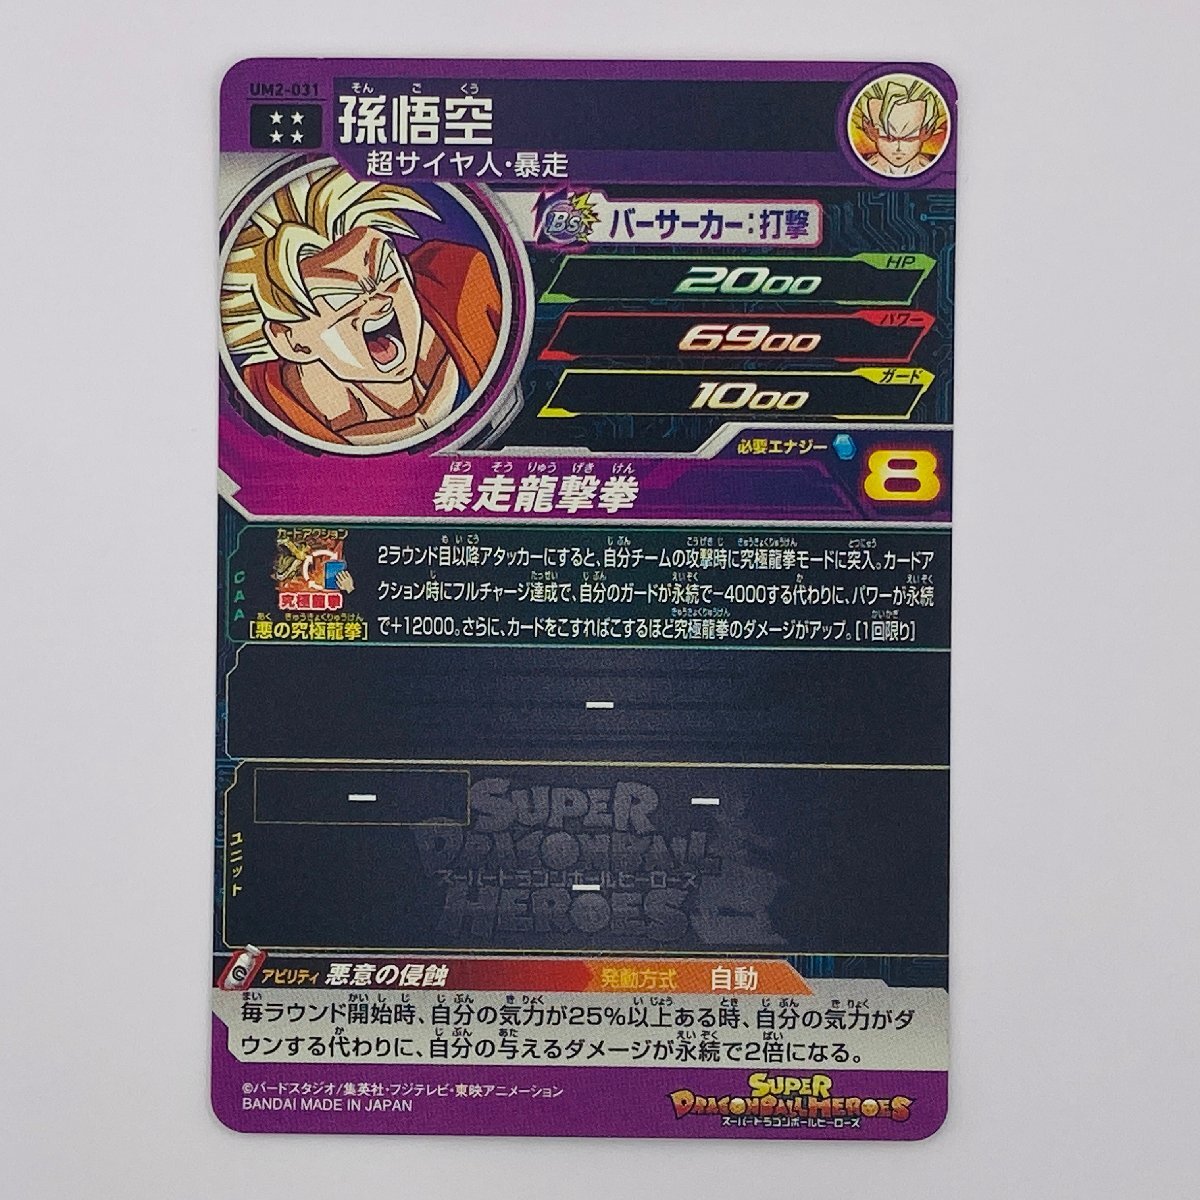 [056-6876k]*1 иен старт * Dragon Ball Heroes Monkey King (. пробег дракон ..) Ultimate редкость UM2-031